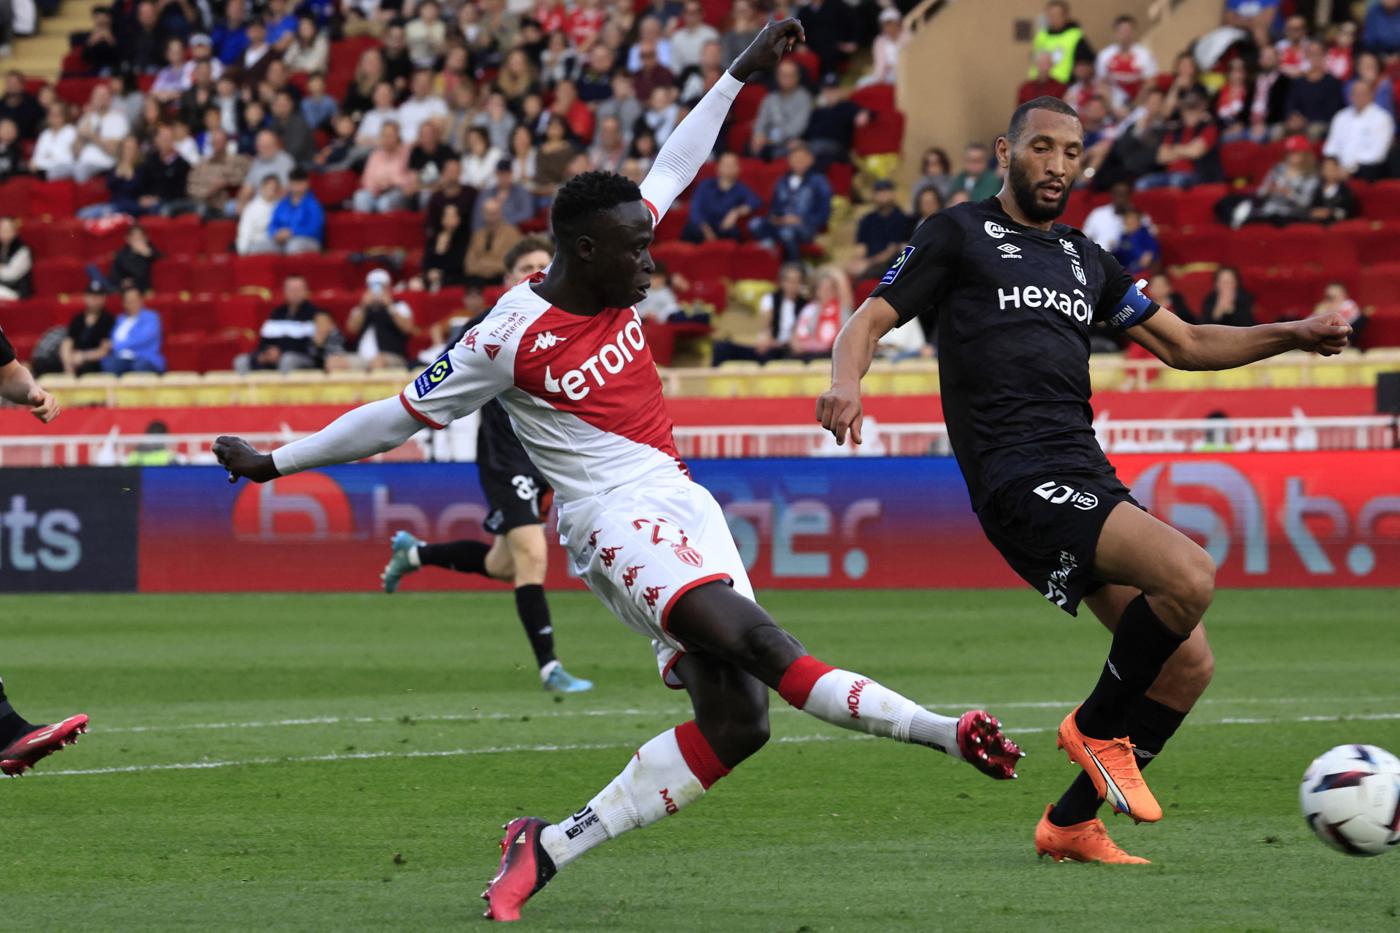 Monaco - Reims - 0:1. French Championship, round 27. Match Review, Statistics